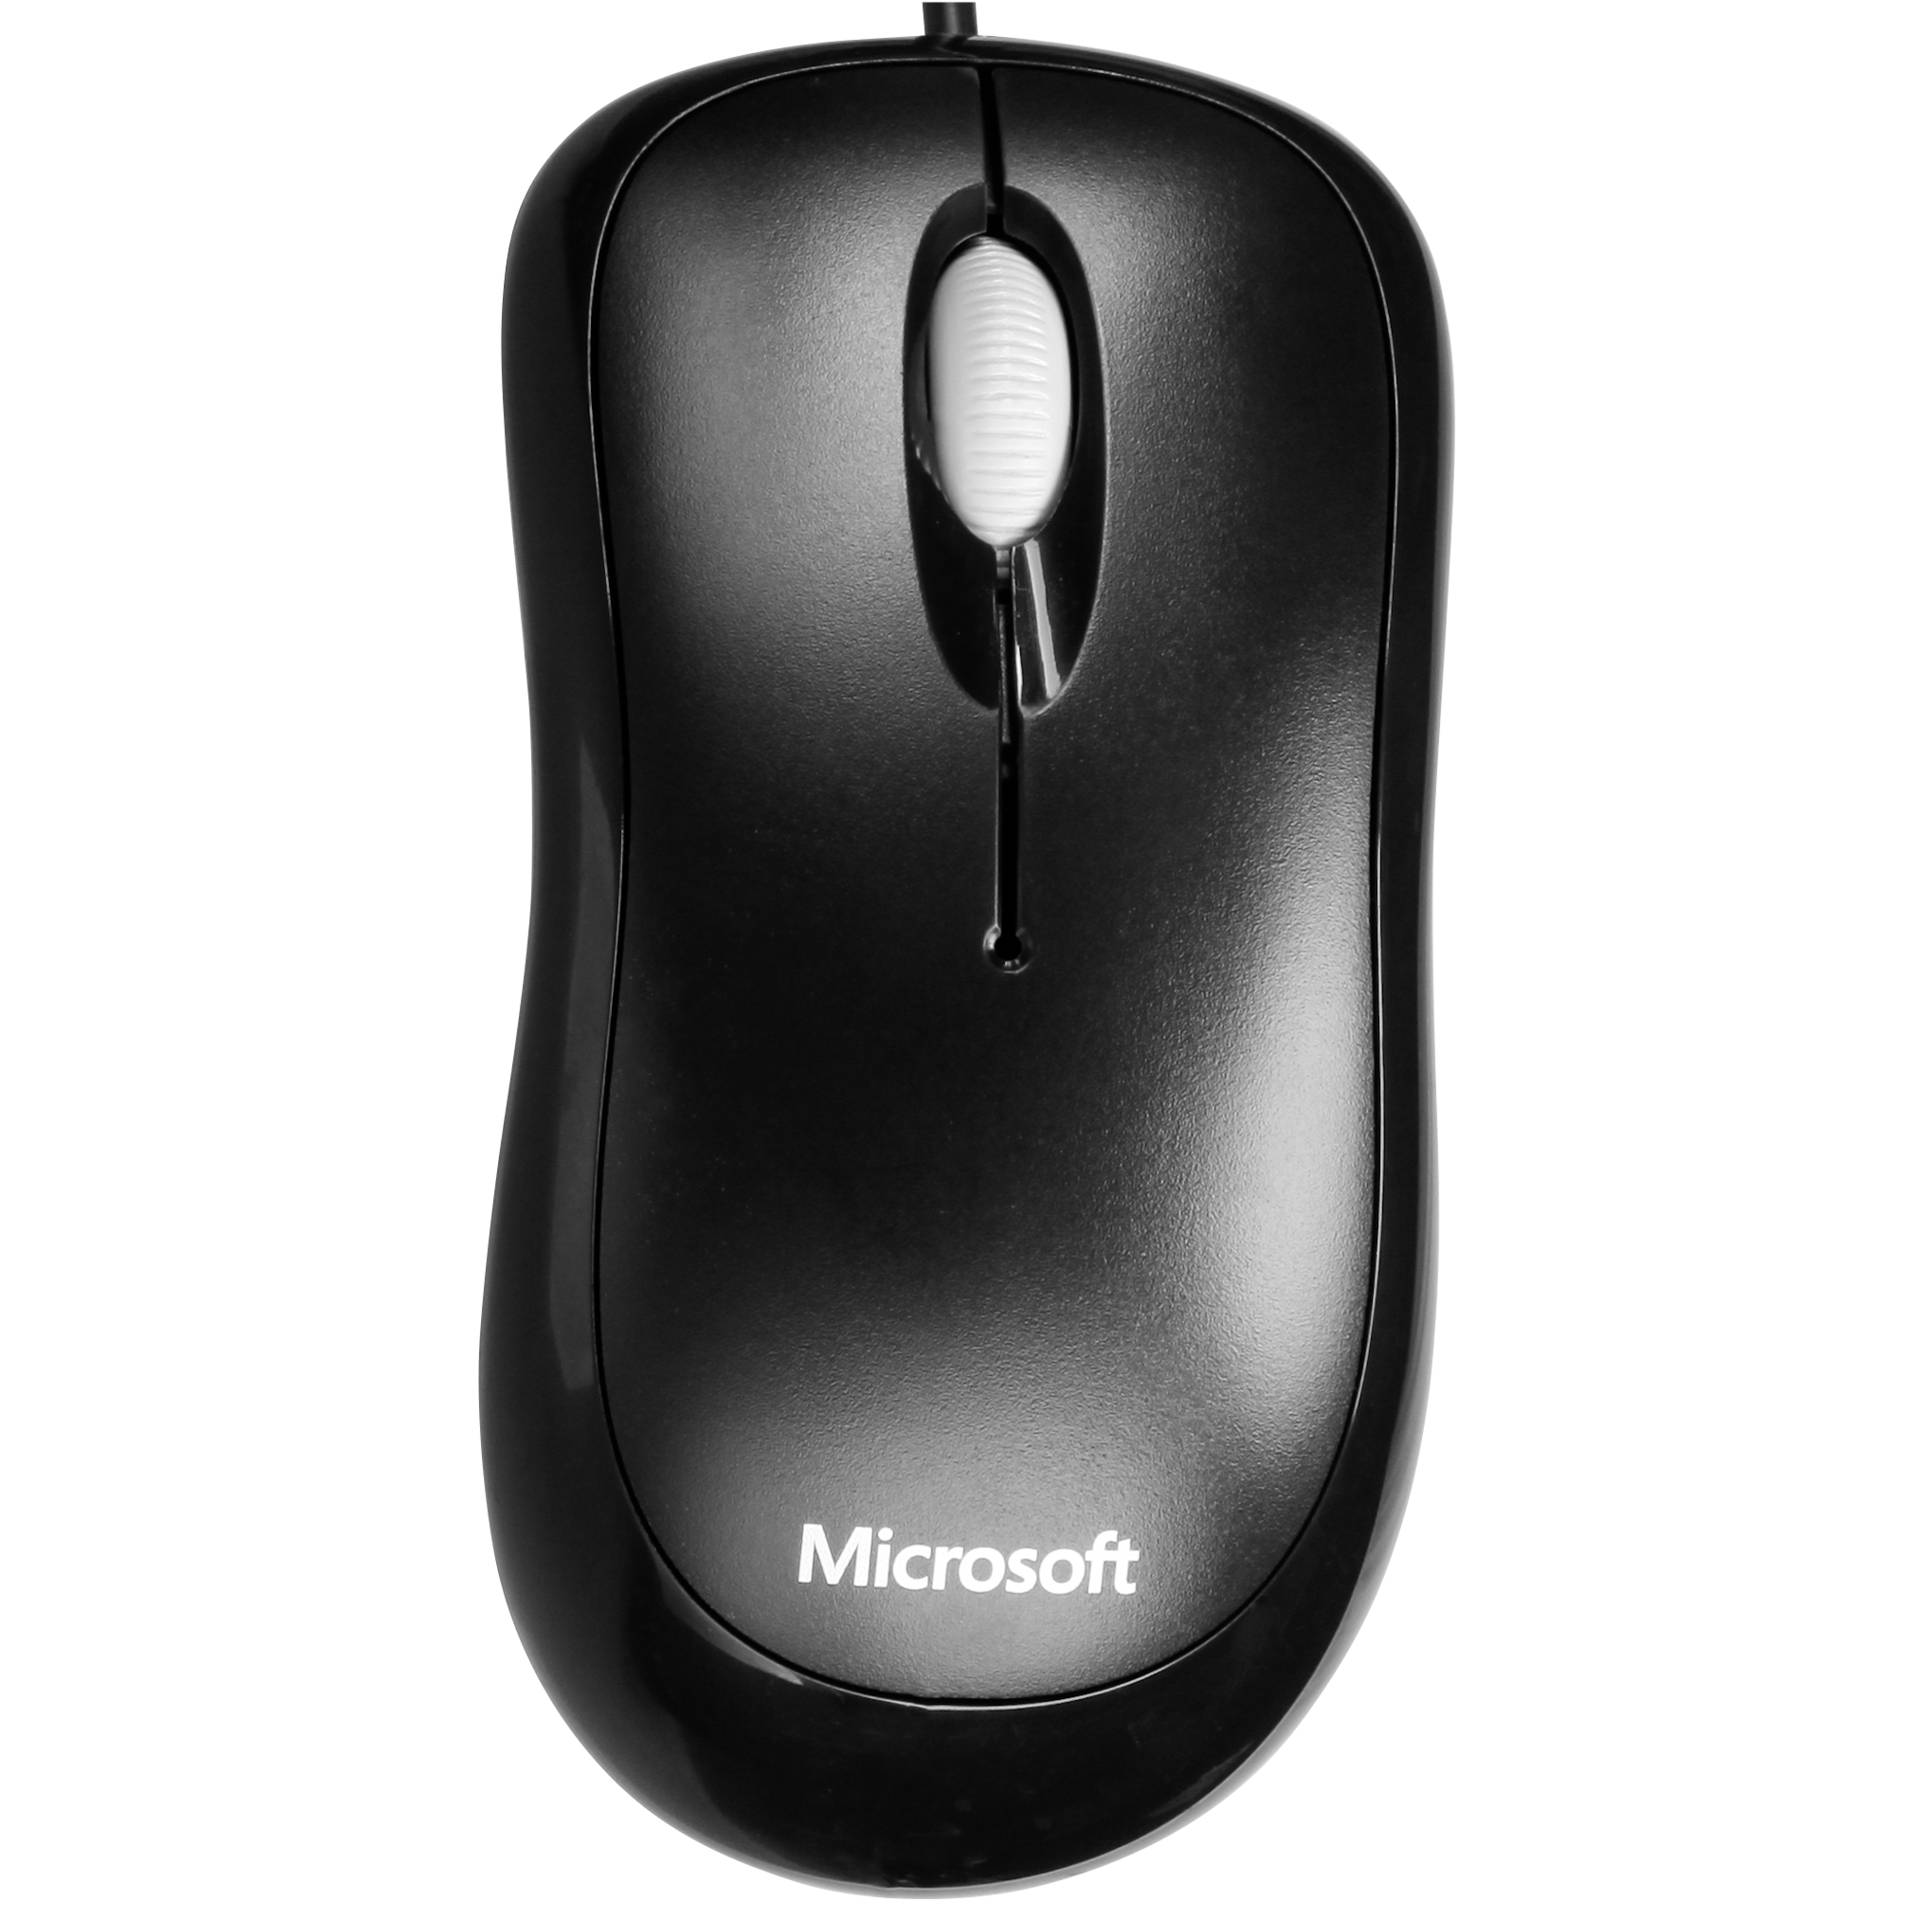 Microsoft Basic Optical Mouse v2.0 schwarz, Maus, beidhändig, kabelgebunden (1.8m), USB